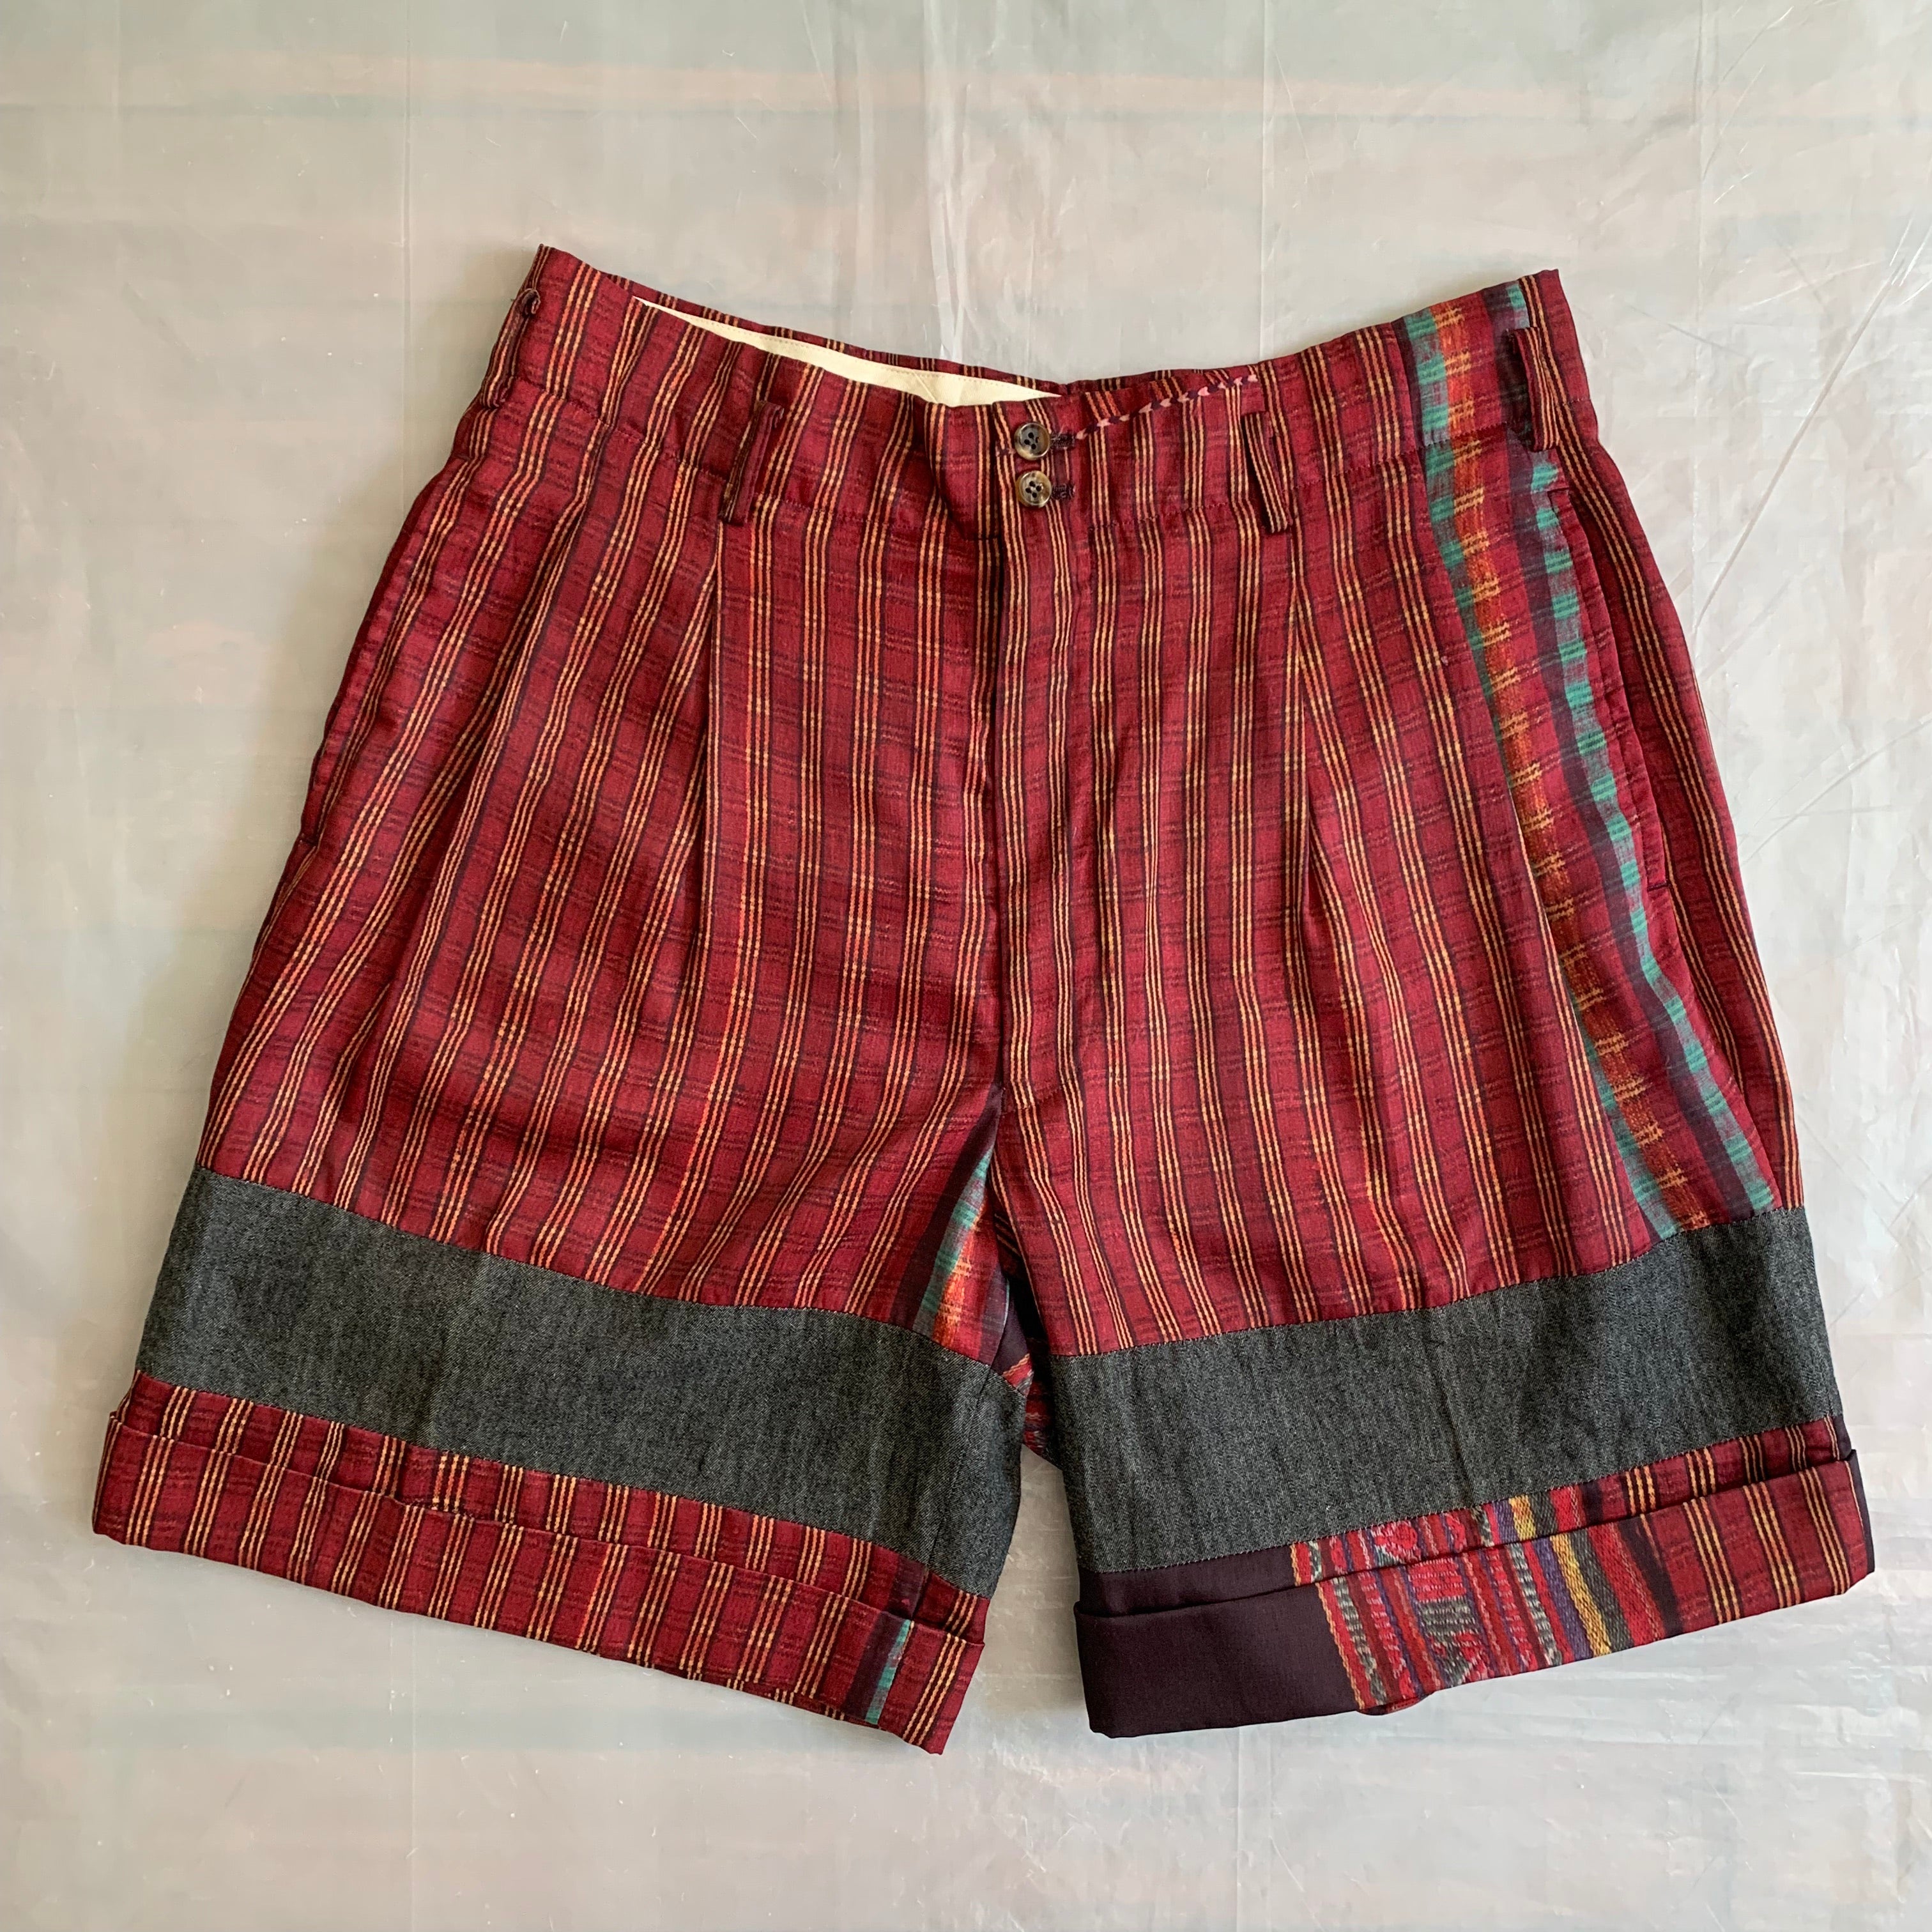 ss1992 CDGH+ Sample Tribal Pattern Shorts - Size M